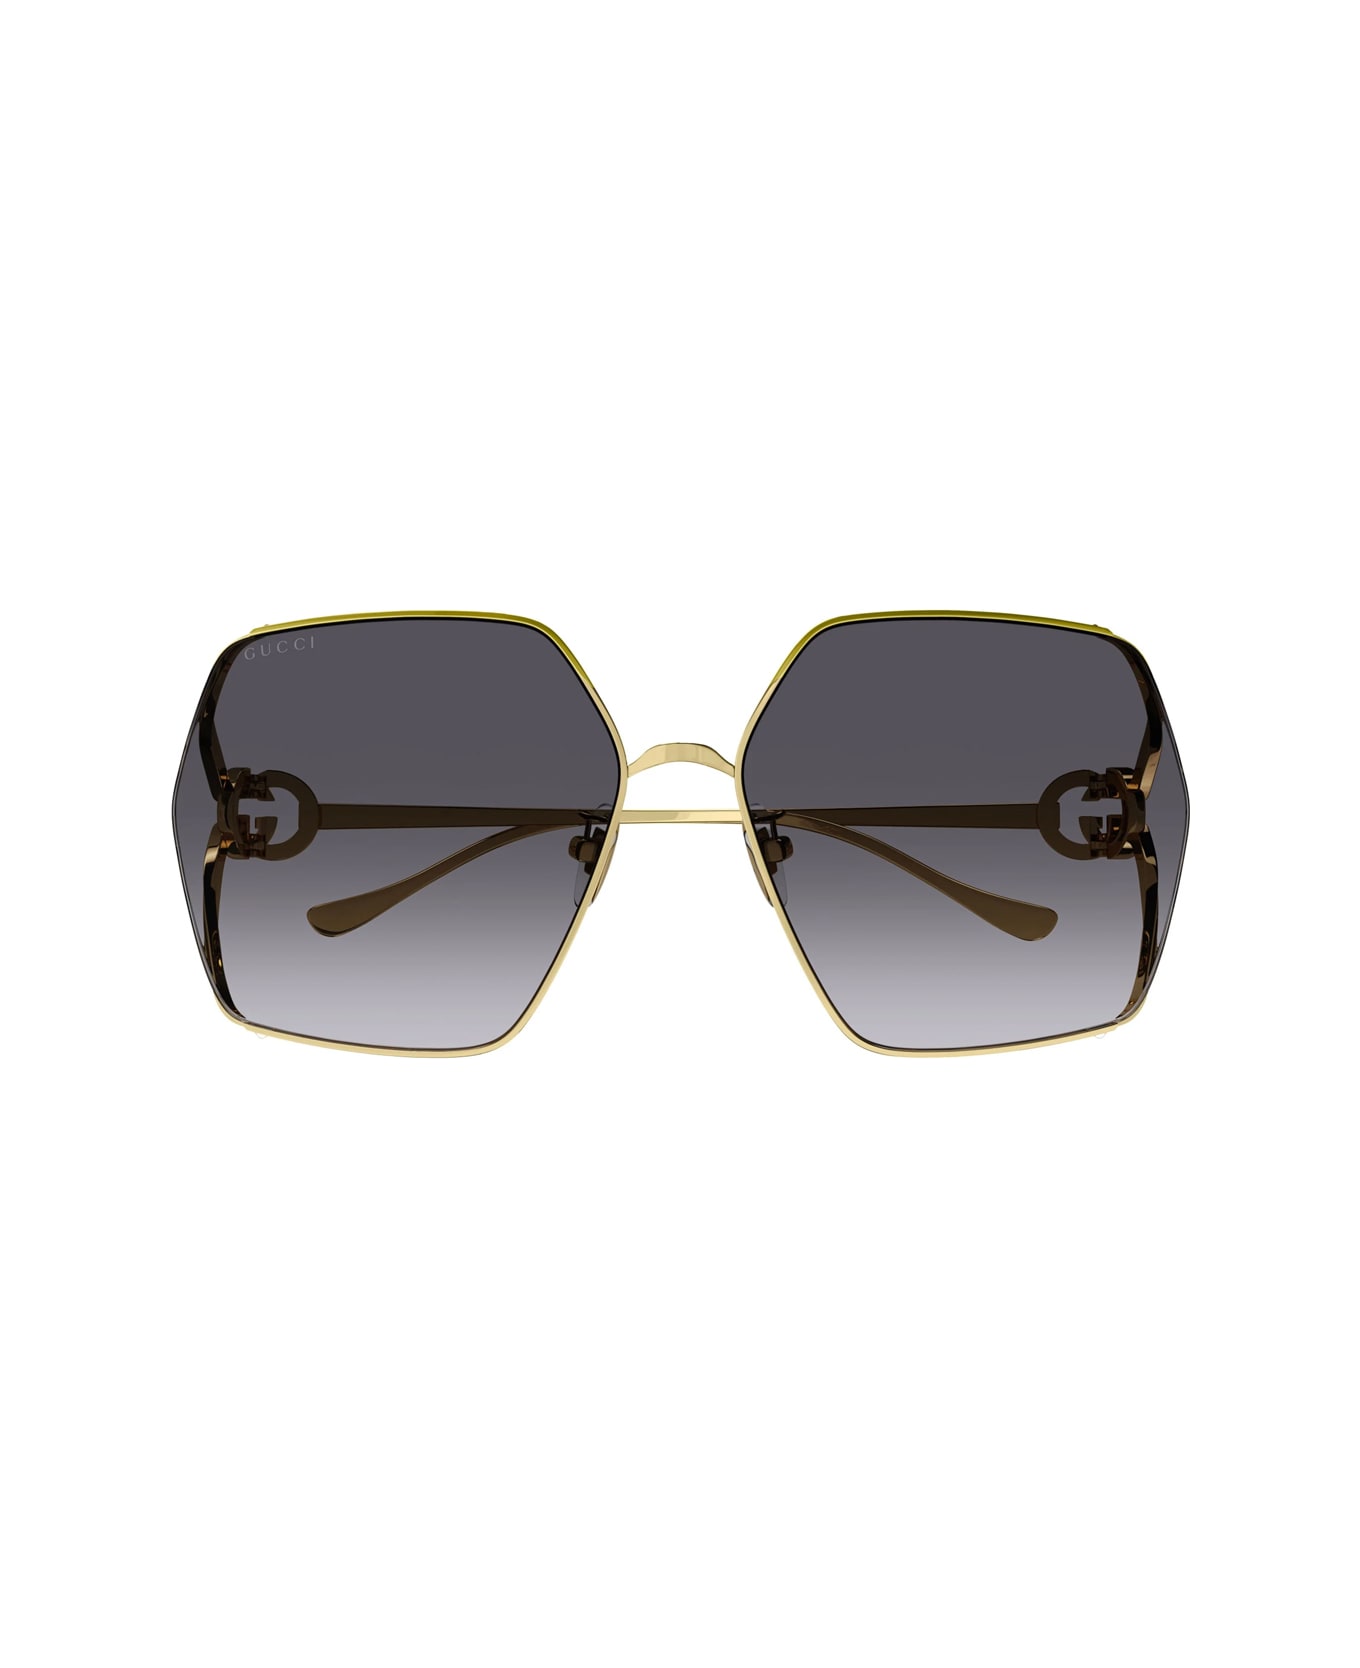 Gucci Eyewear Gg1322sa 001 Sunglasses Sunglasses - 001 GOLD GOLD GREY